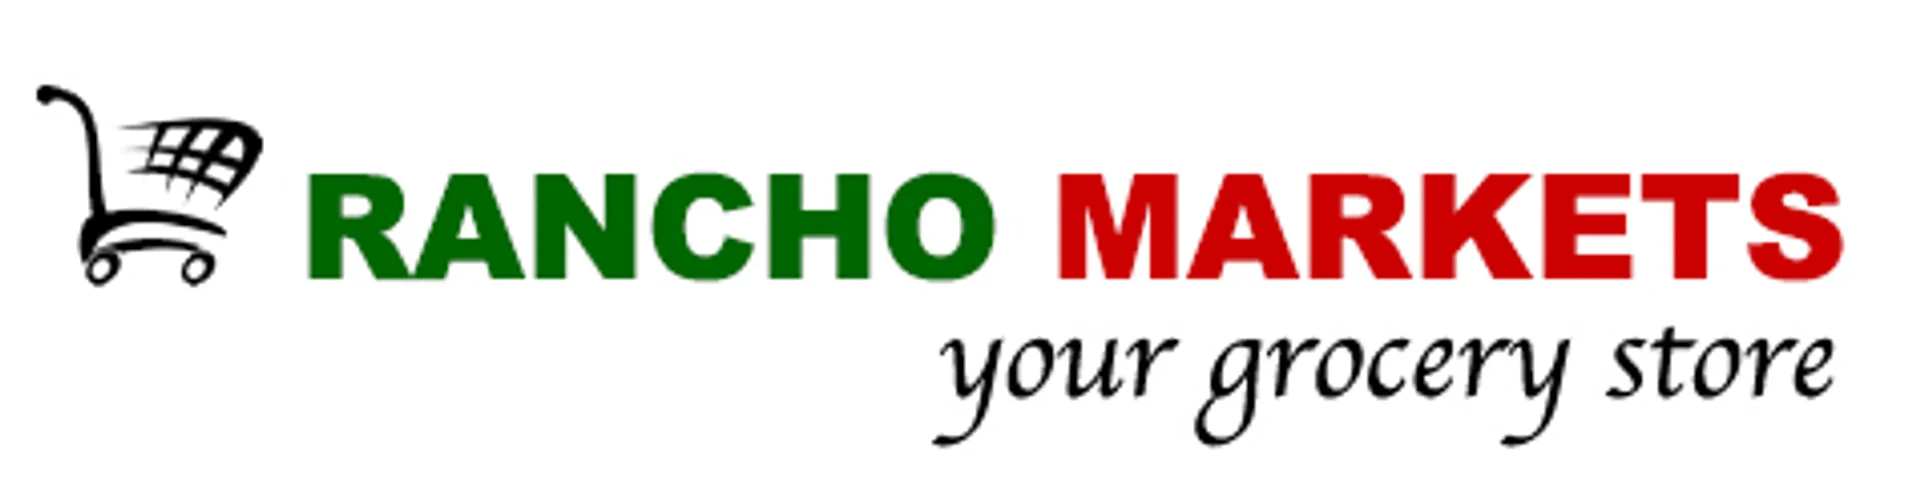 RANCHO MARKETS logo current weekly ad